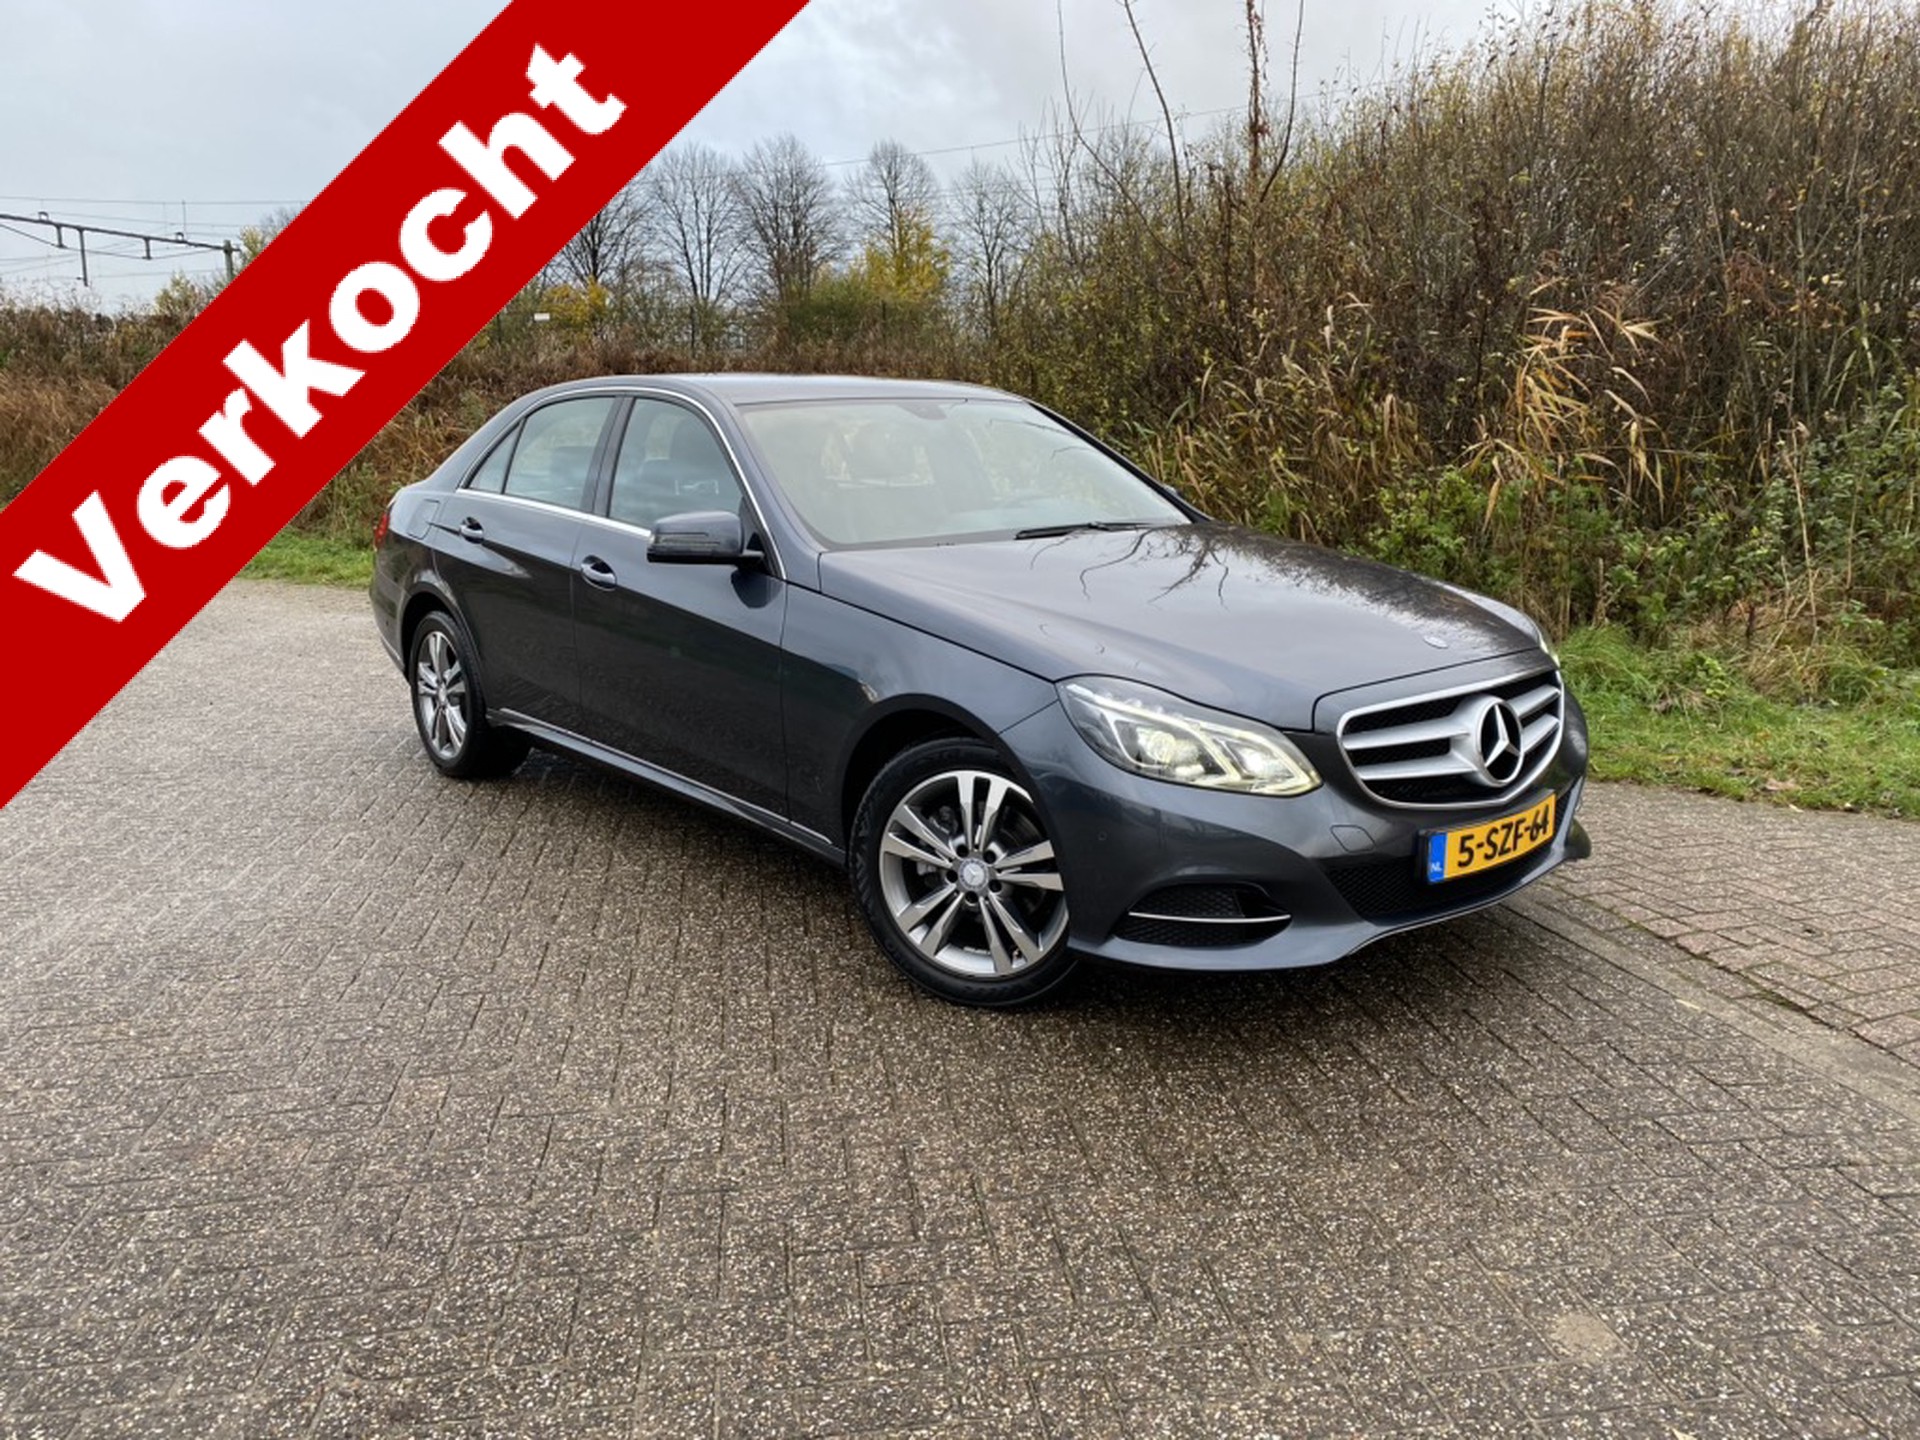 Mercedes-Benz E-Klasse CDI Prestige Avantgarde kopen? | Autocentrumbommelerwaard.nl